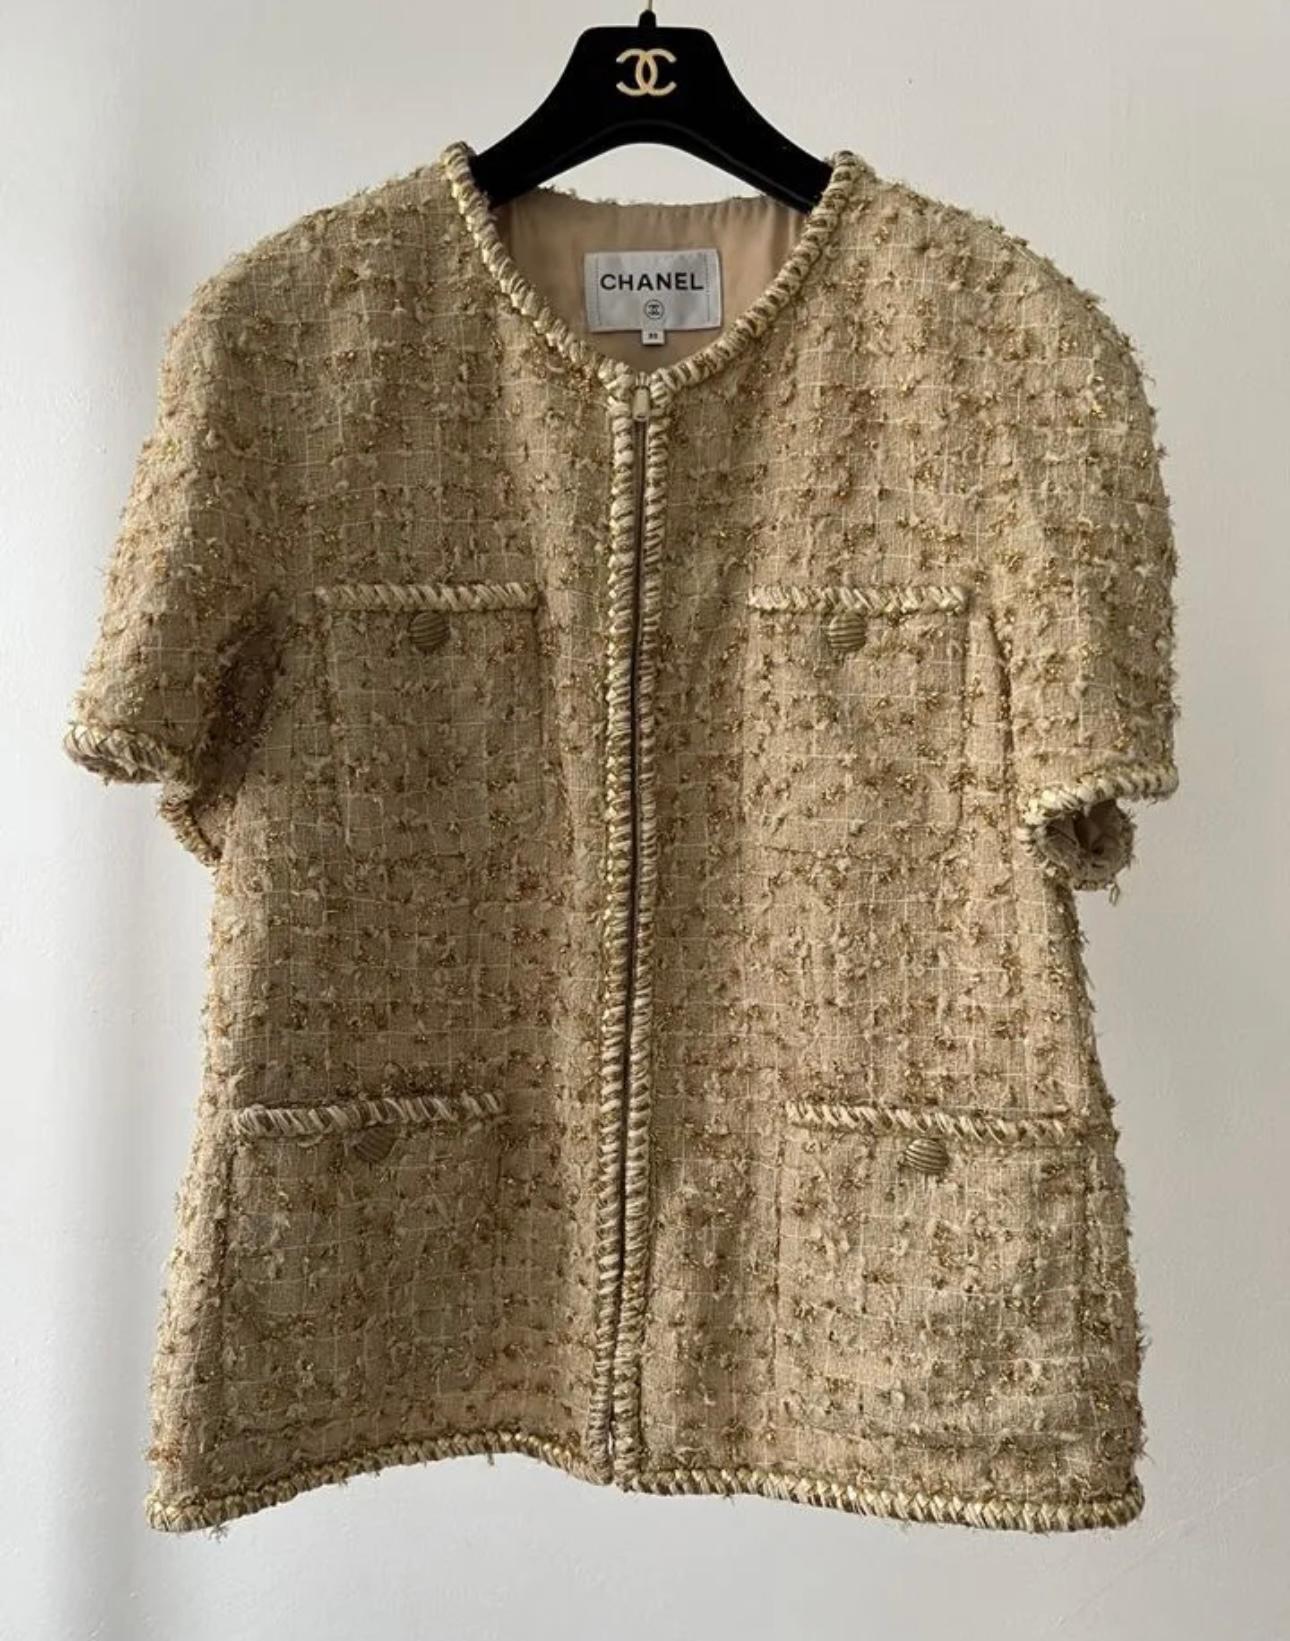 Chanel New Iconic 2019 Spring Beige Sand Tweed Jacket 4